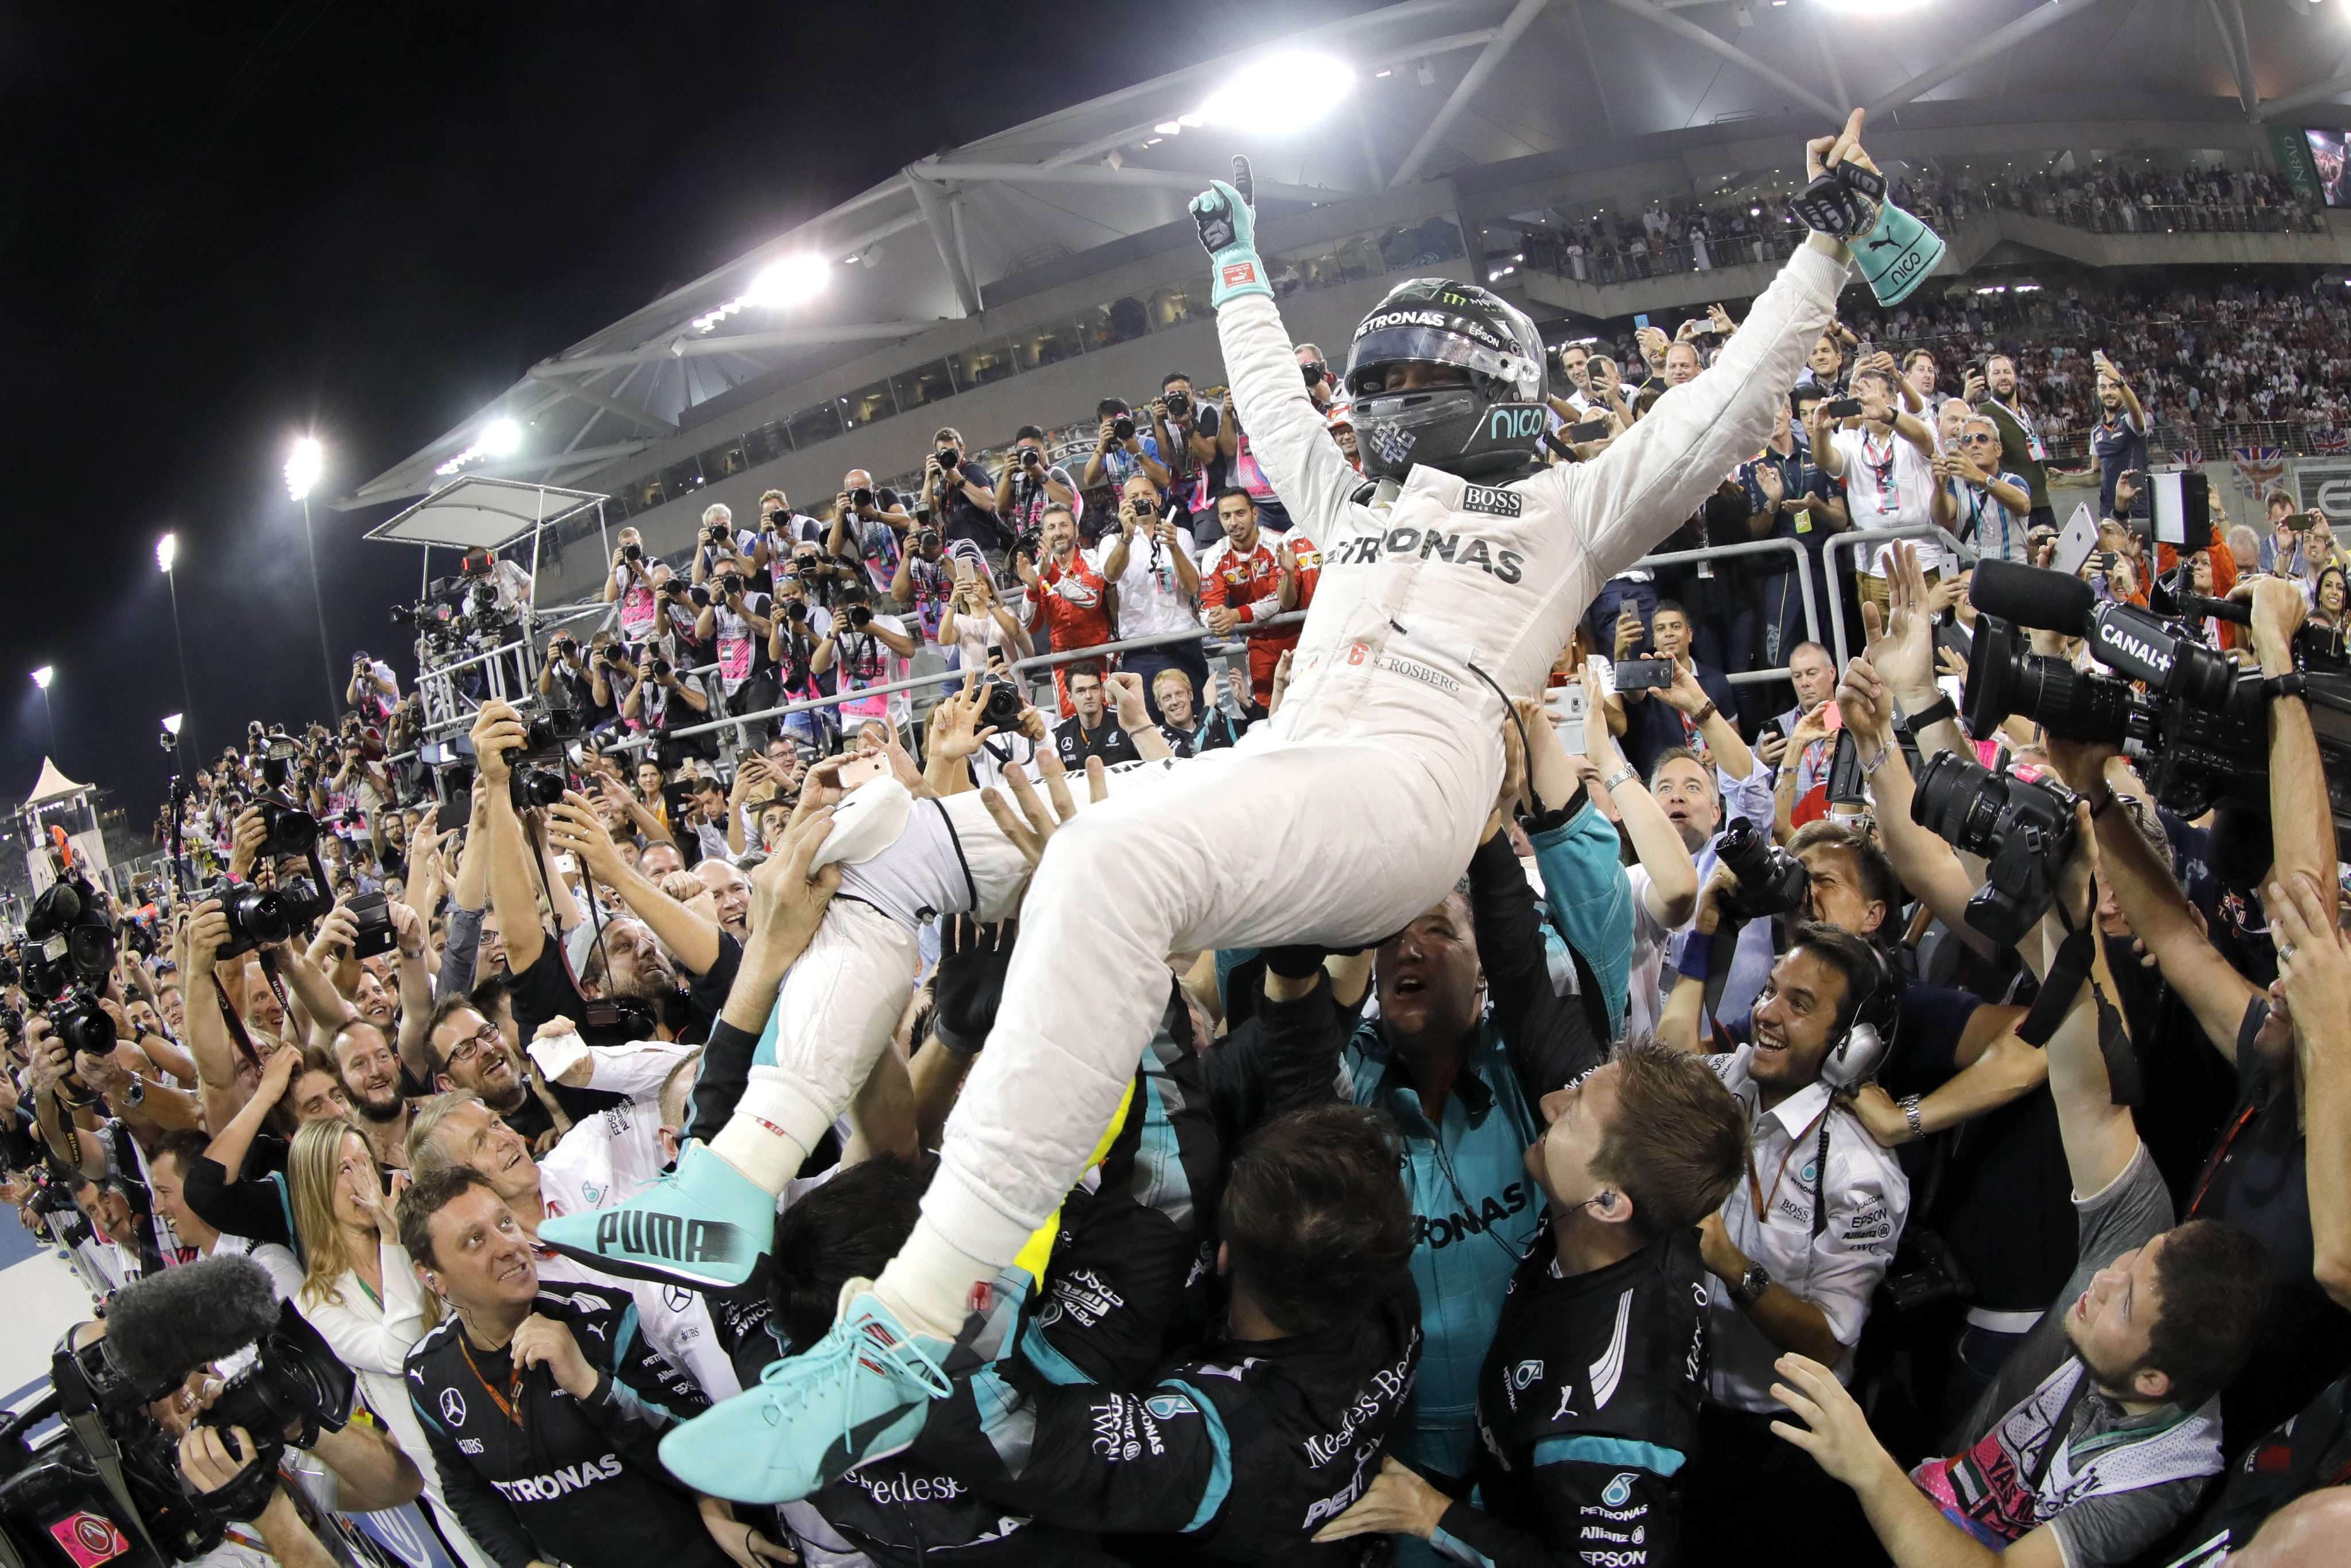 German Formula One driver Nico Rosberg celebrates with his team after winning the Formula One World Championship. Photo: EPA